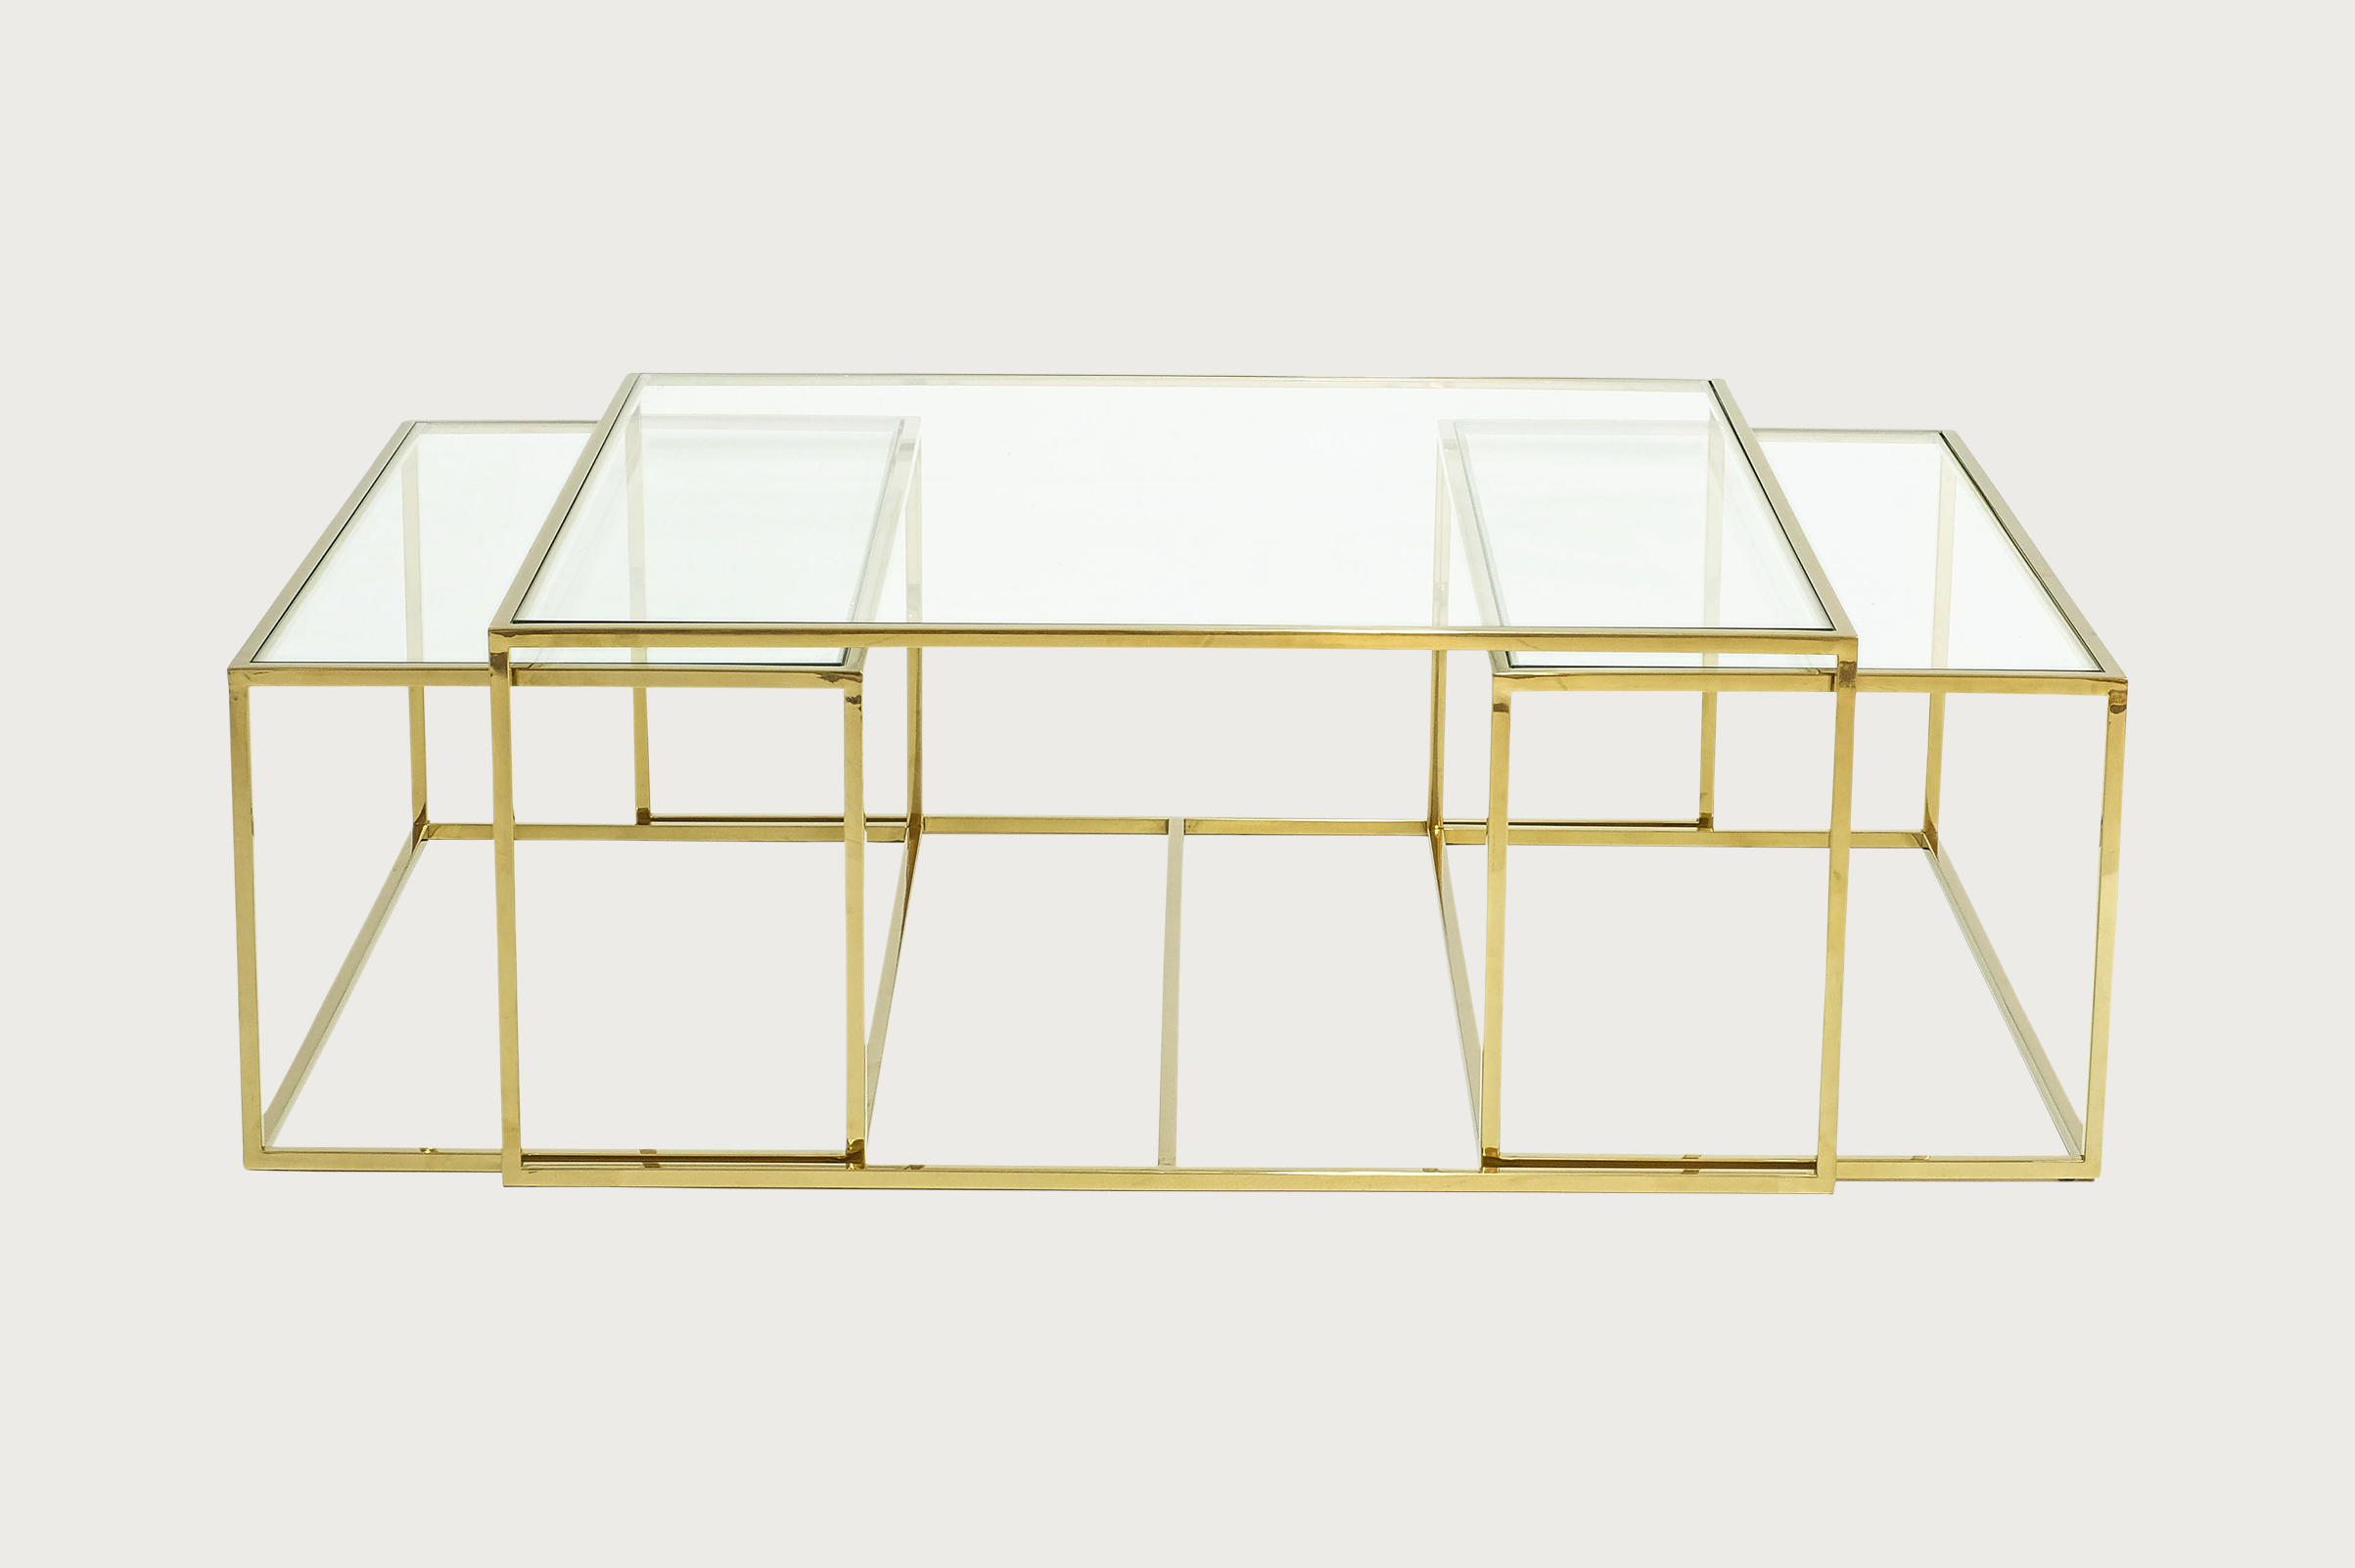 Three Set Table Large – Polished Brass